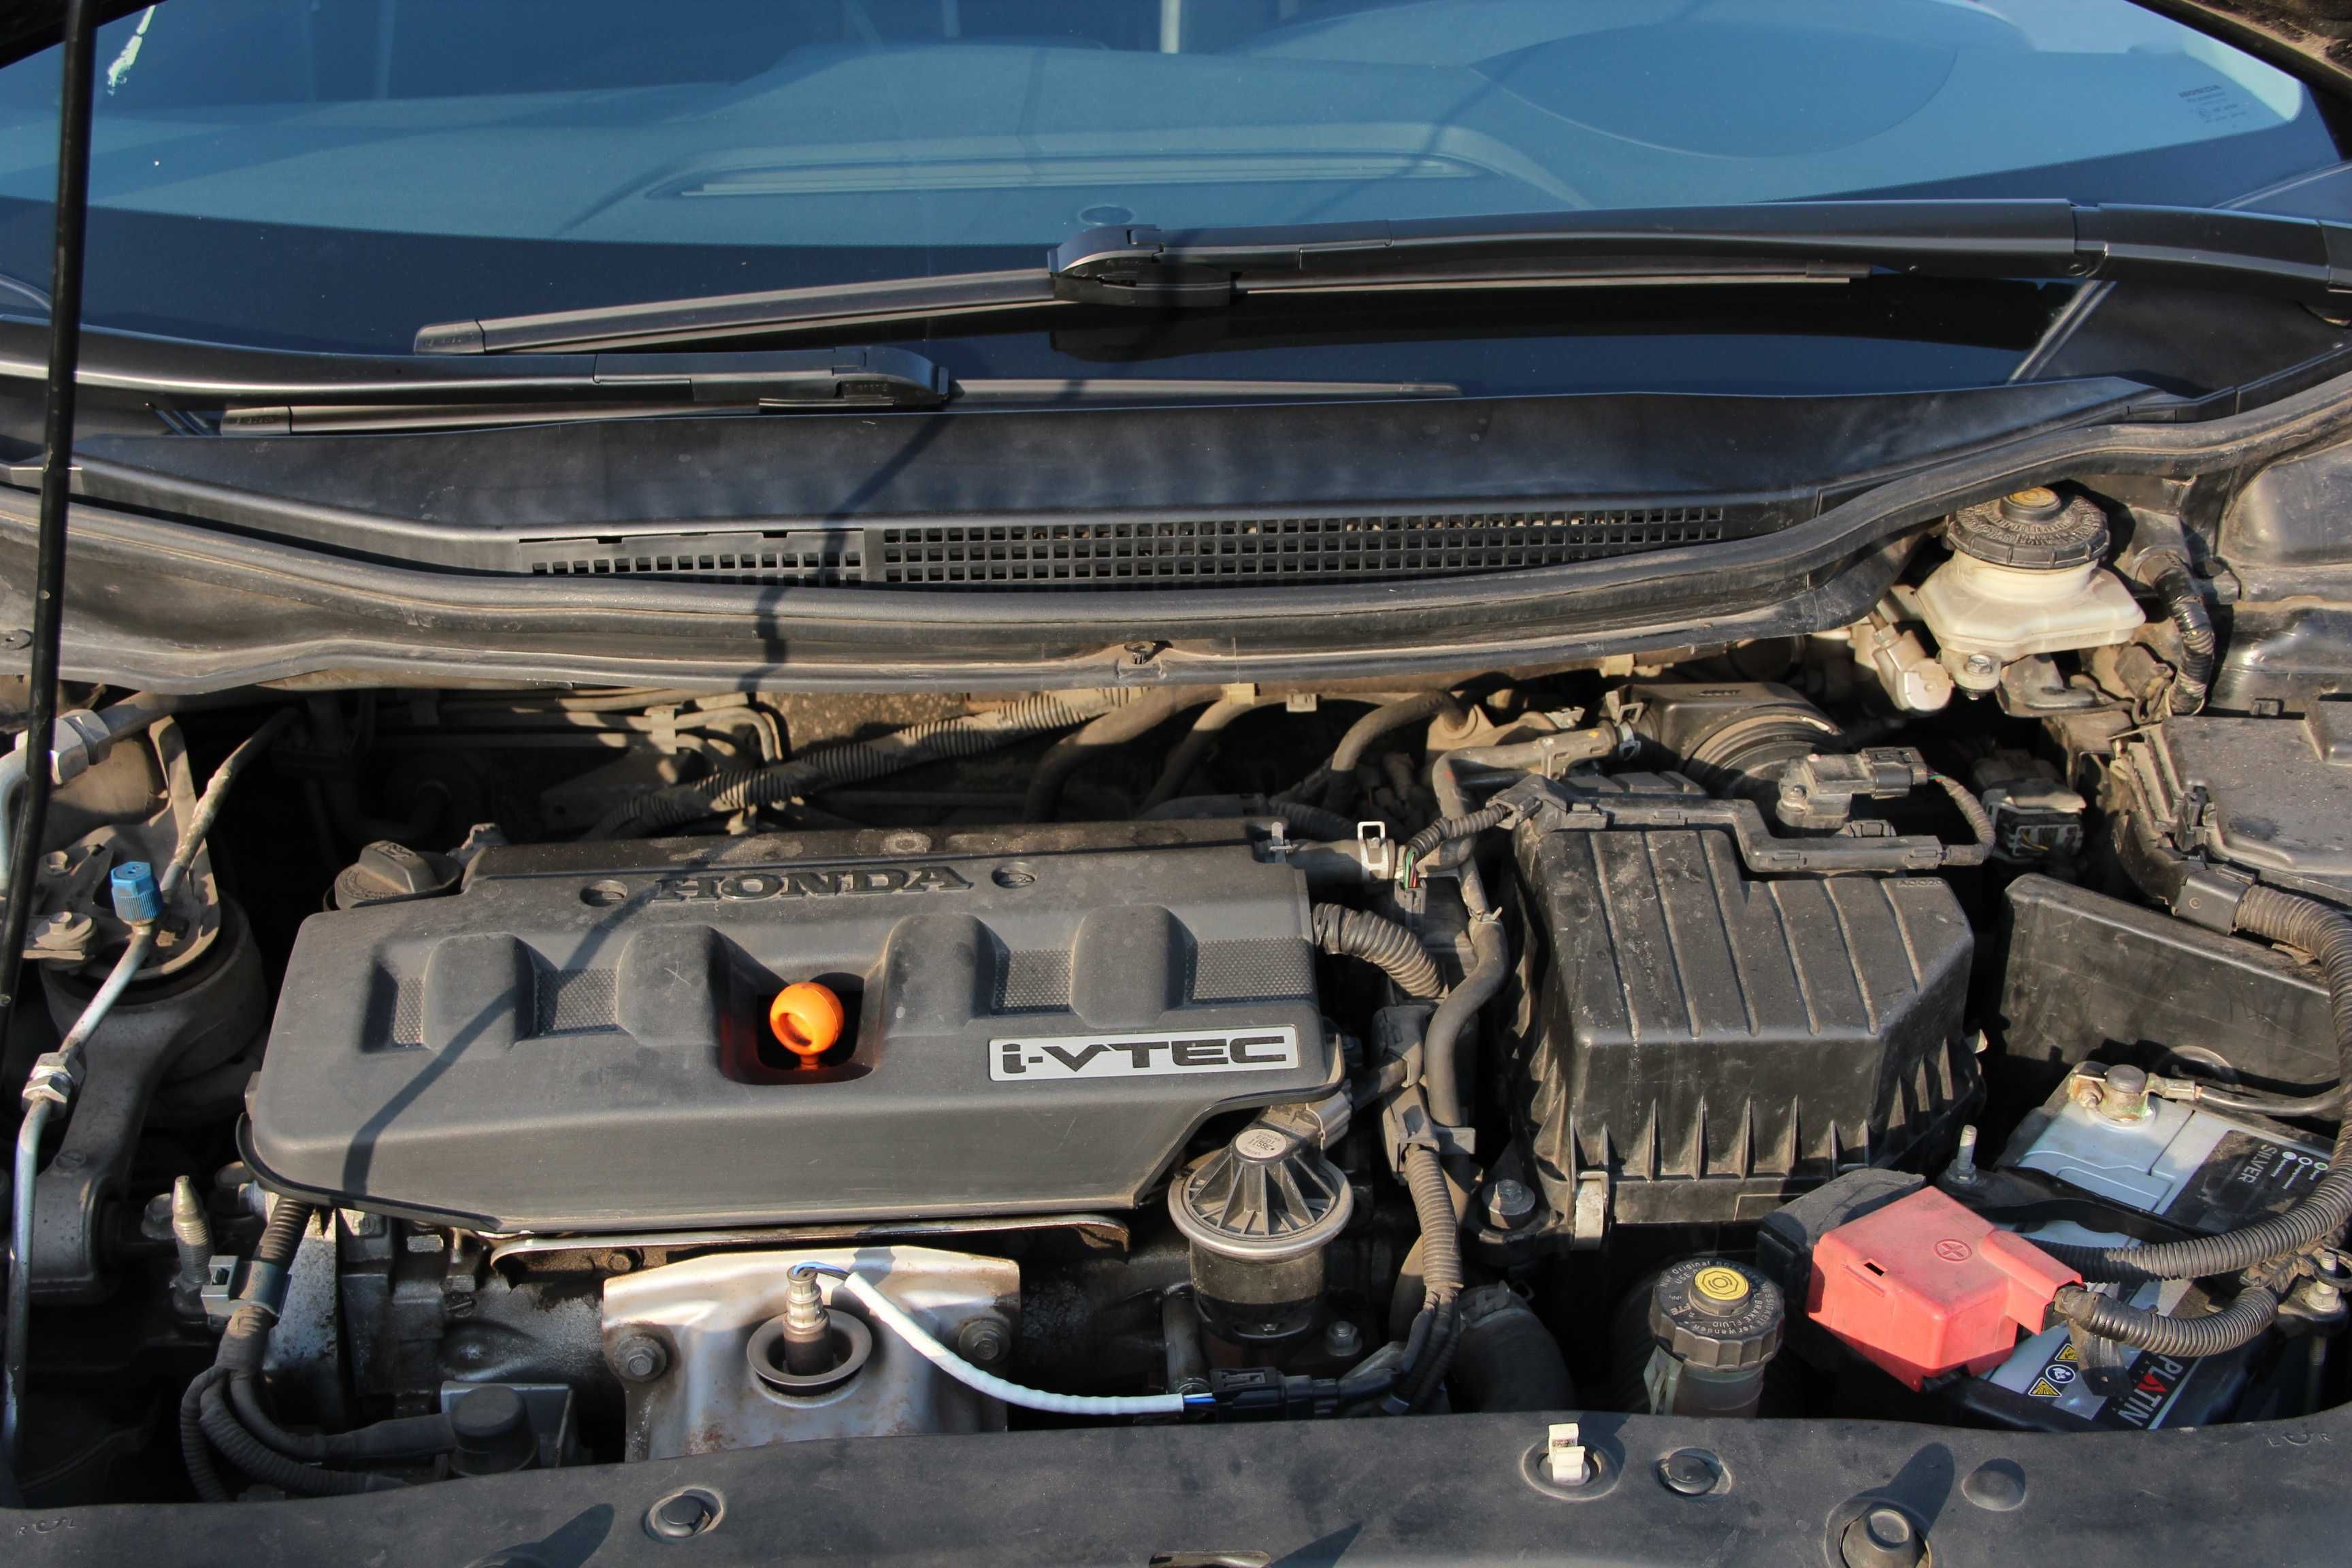 Honda Civic, 2008 год,1.8 бензин, автомат,90т.км,1 хозяин, Хонда Сивик